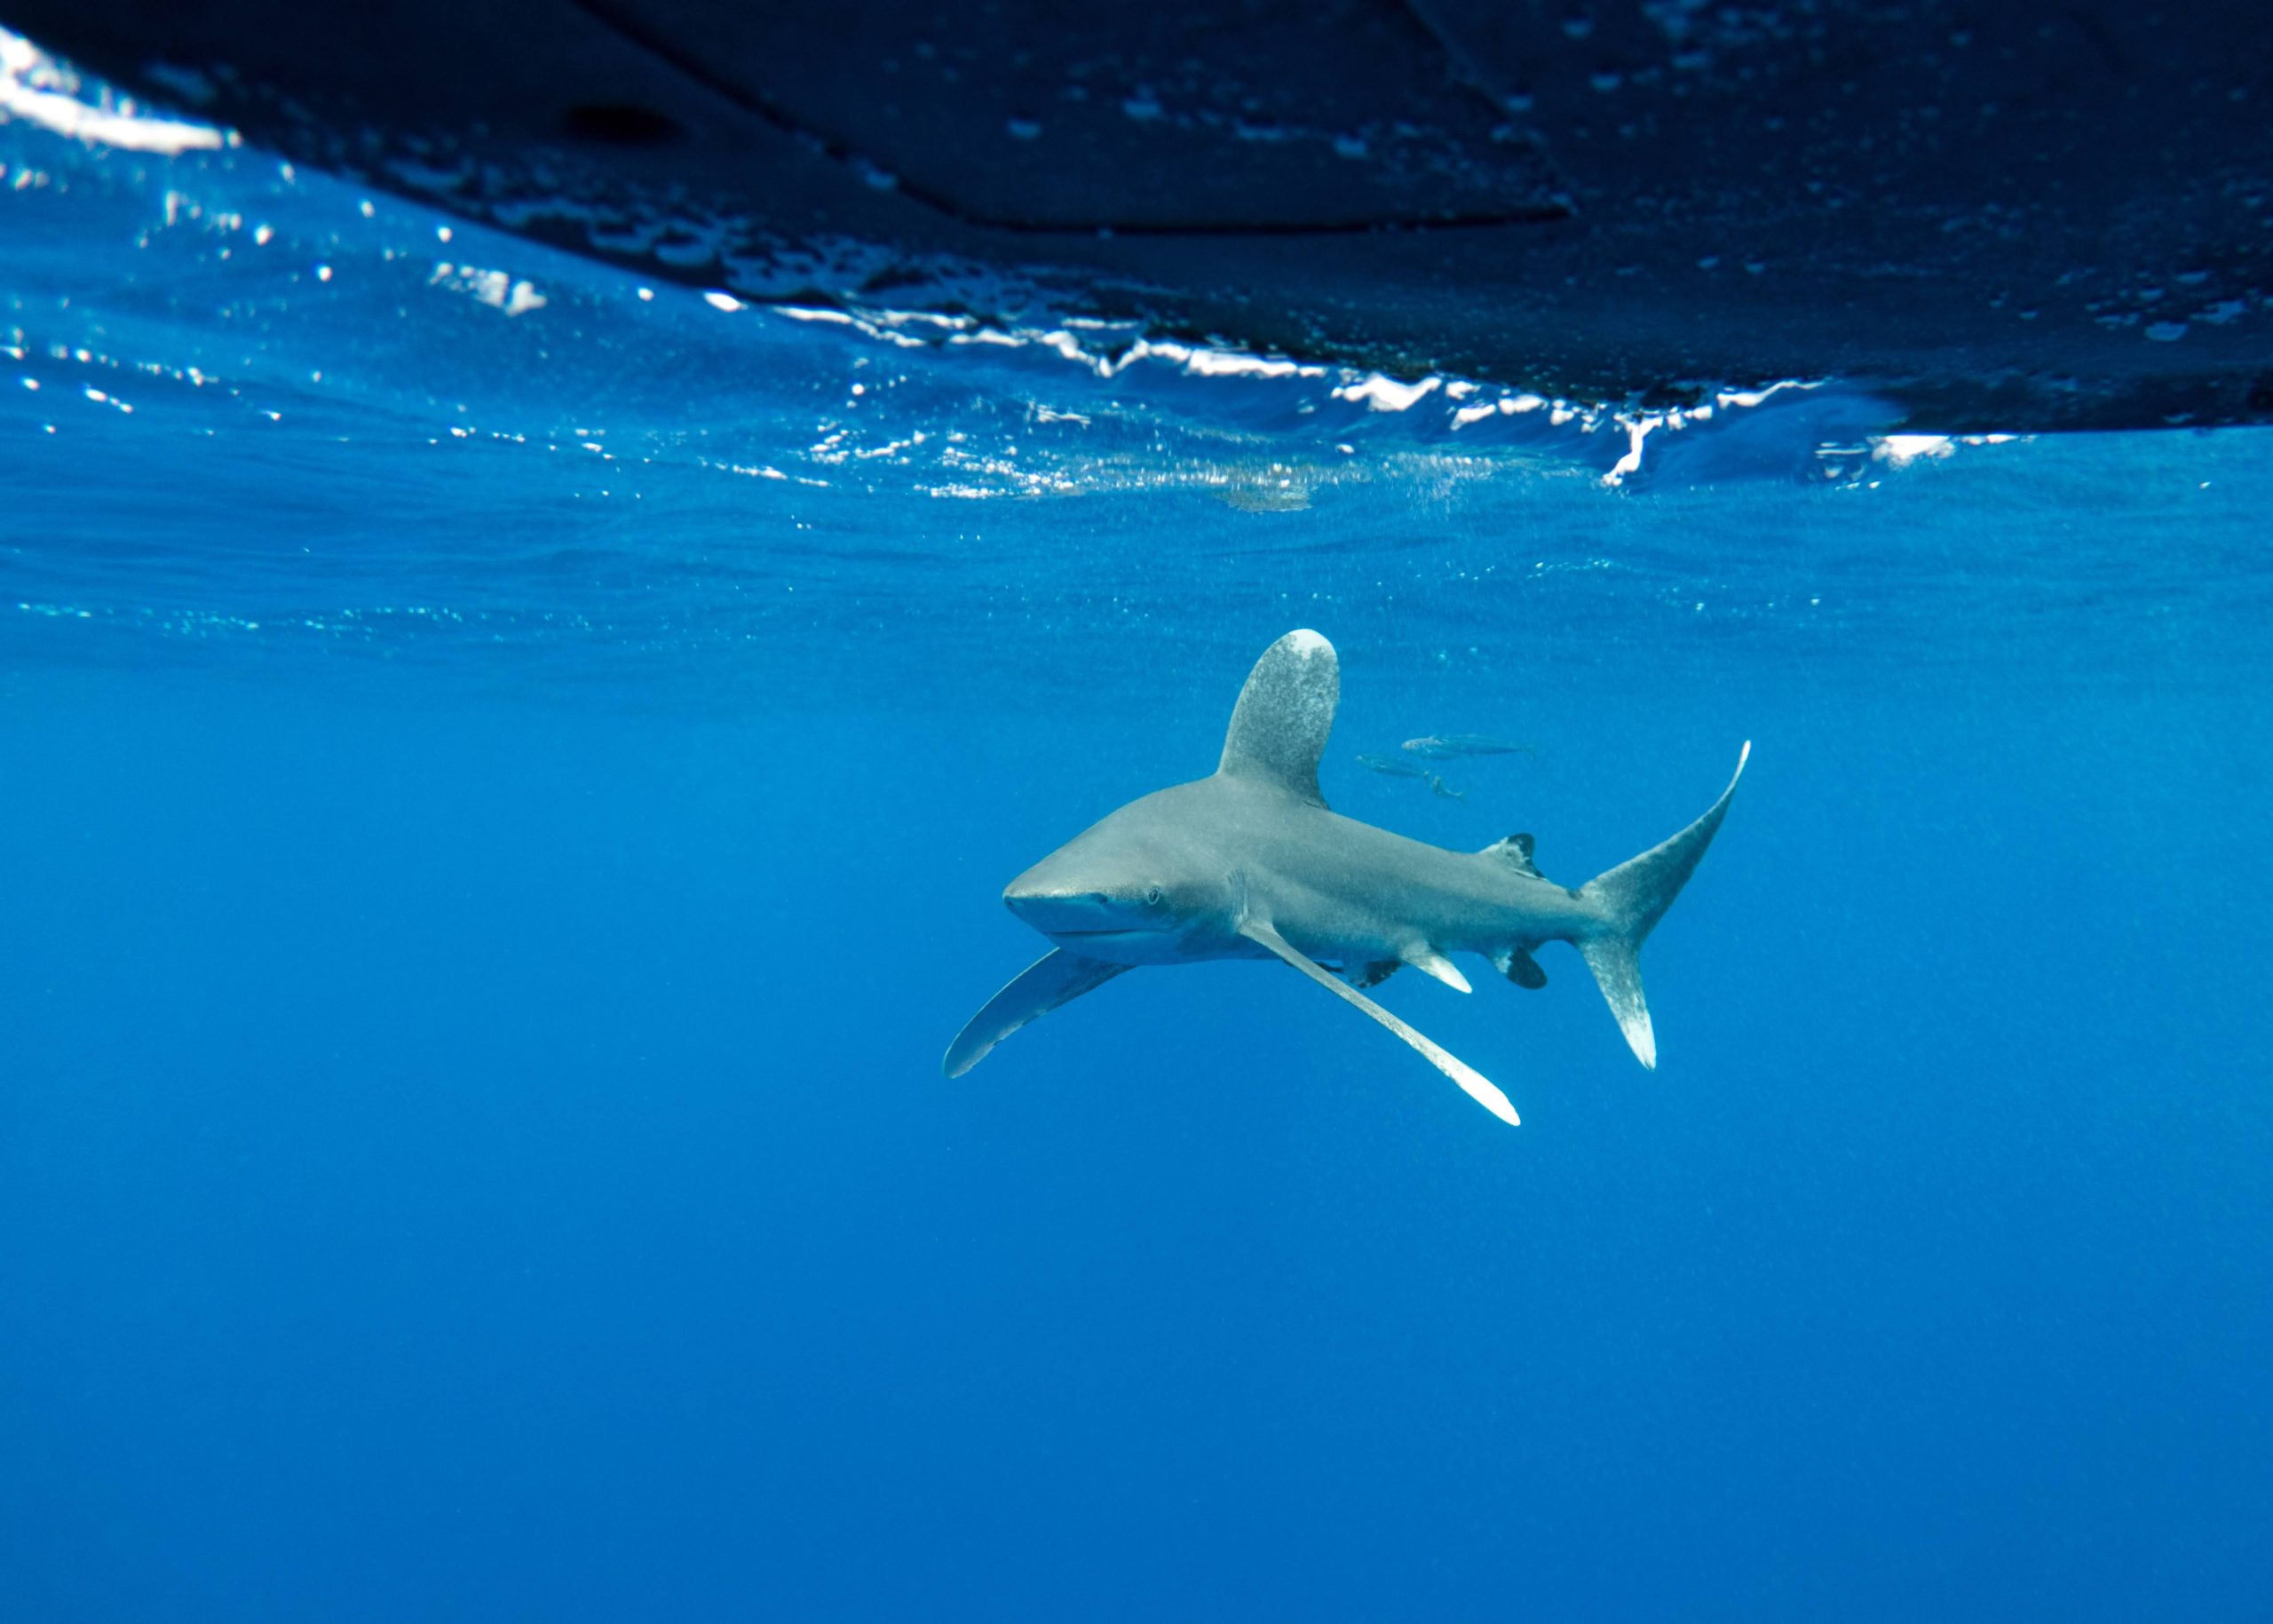 Oceanic whitetip shark swimming at the surface of the ocean. PC: Brendan Talwar